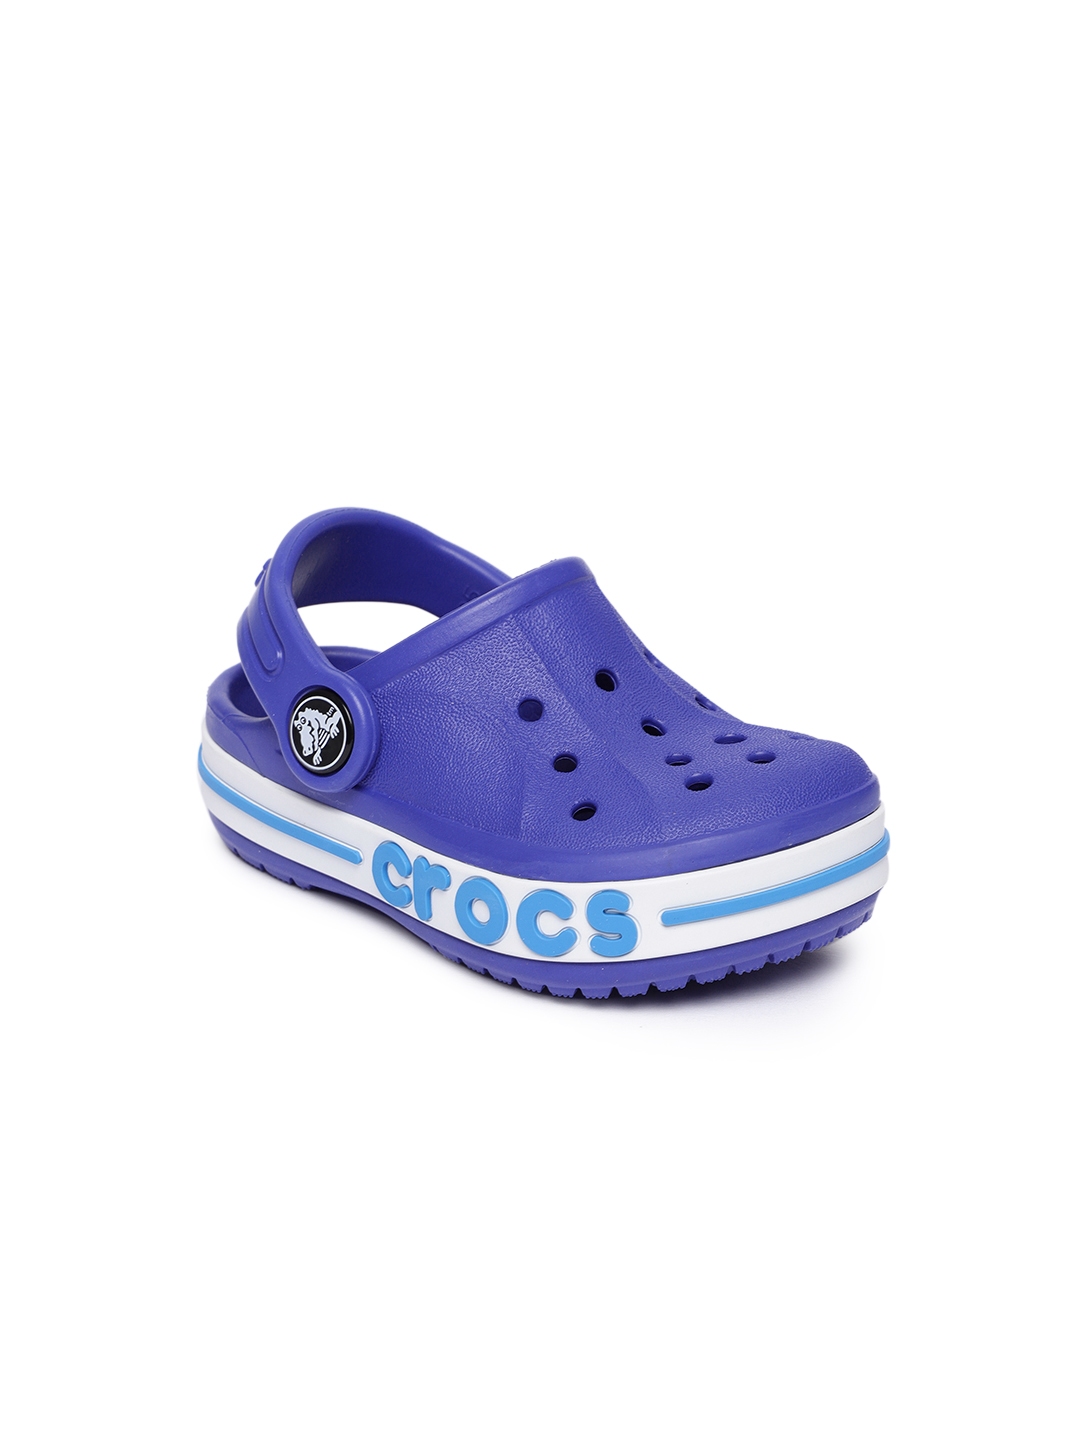 Buy Crocs Boys Blue Solid Clogs - Flip Flops for Boys 8706599 | Myntra